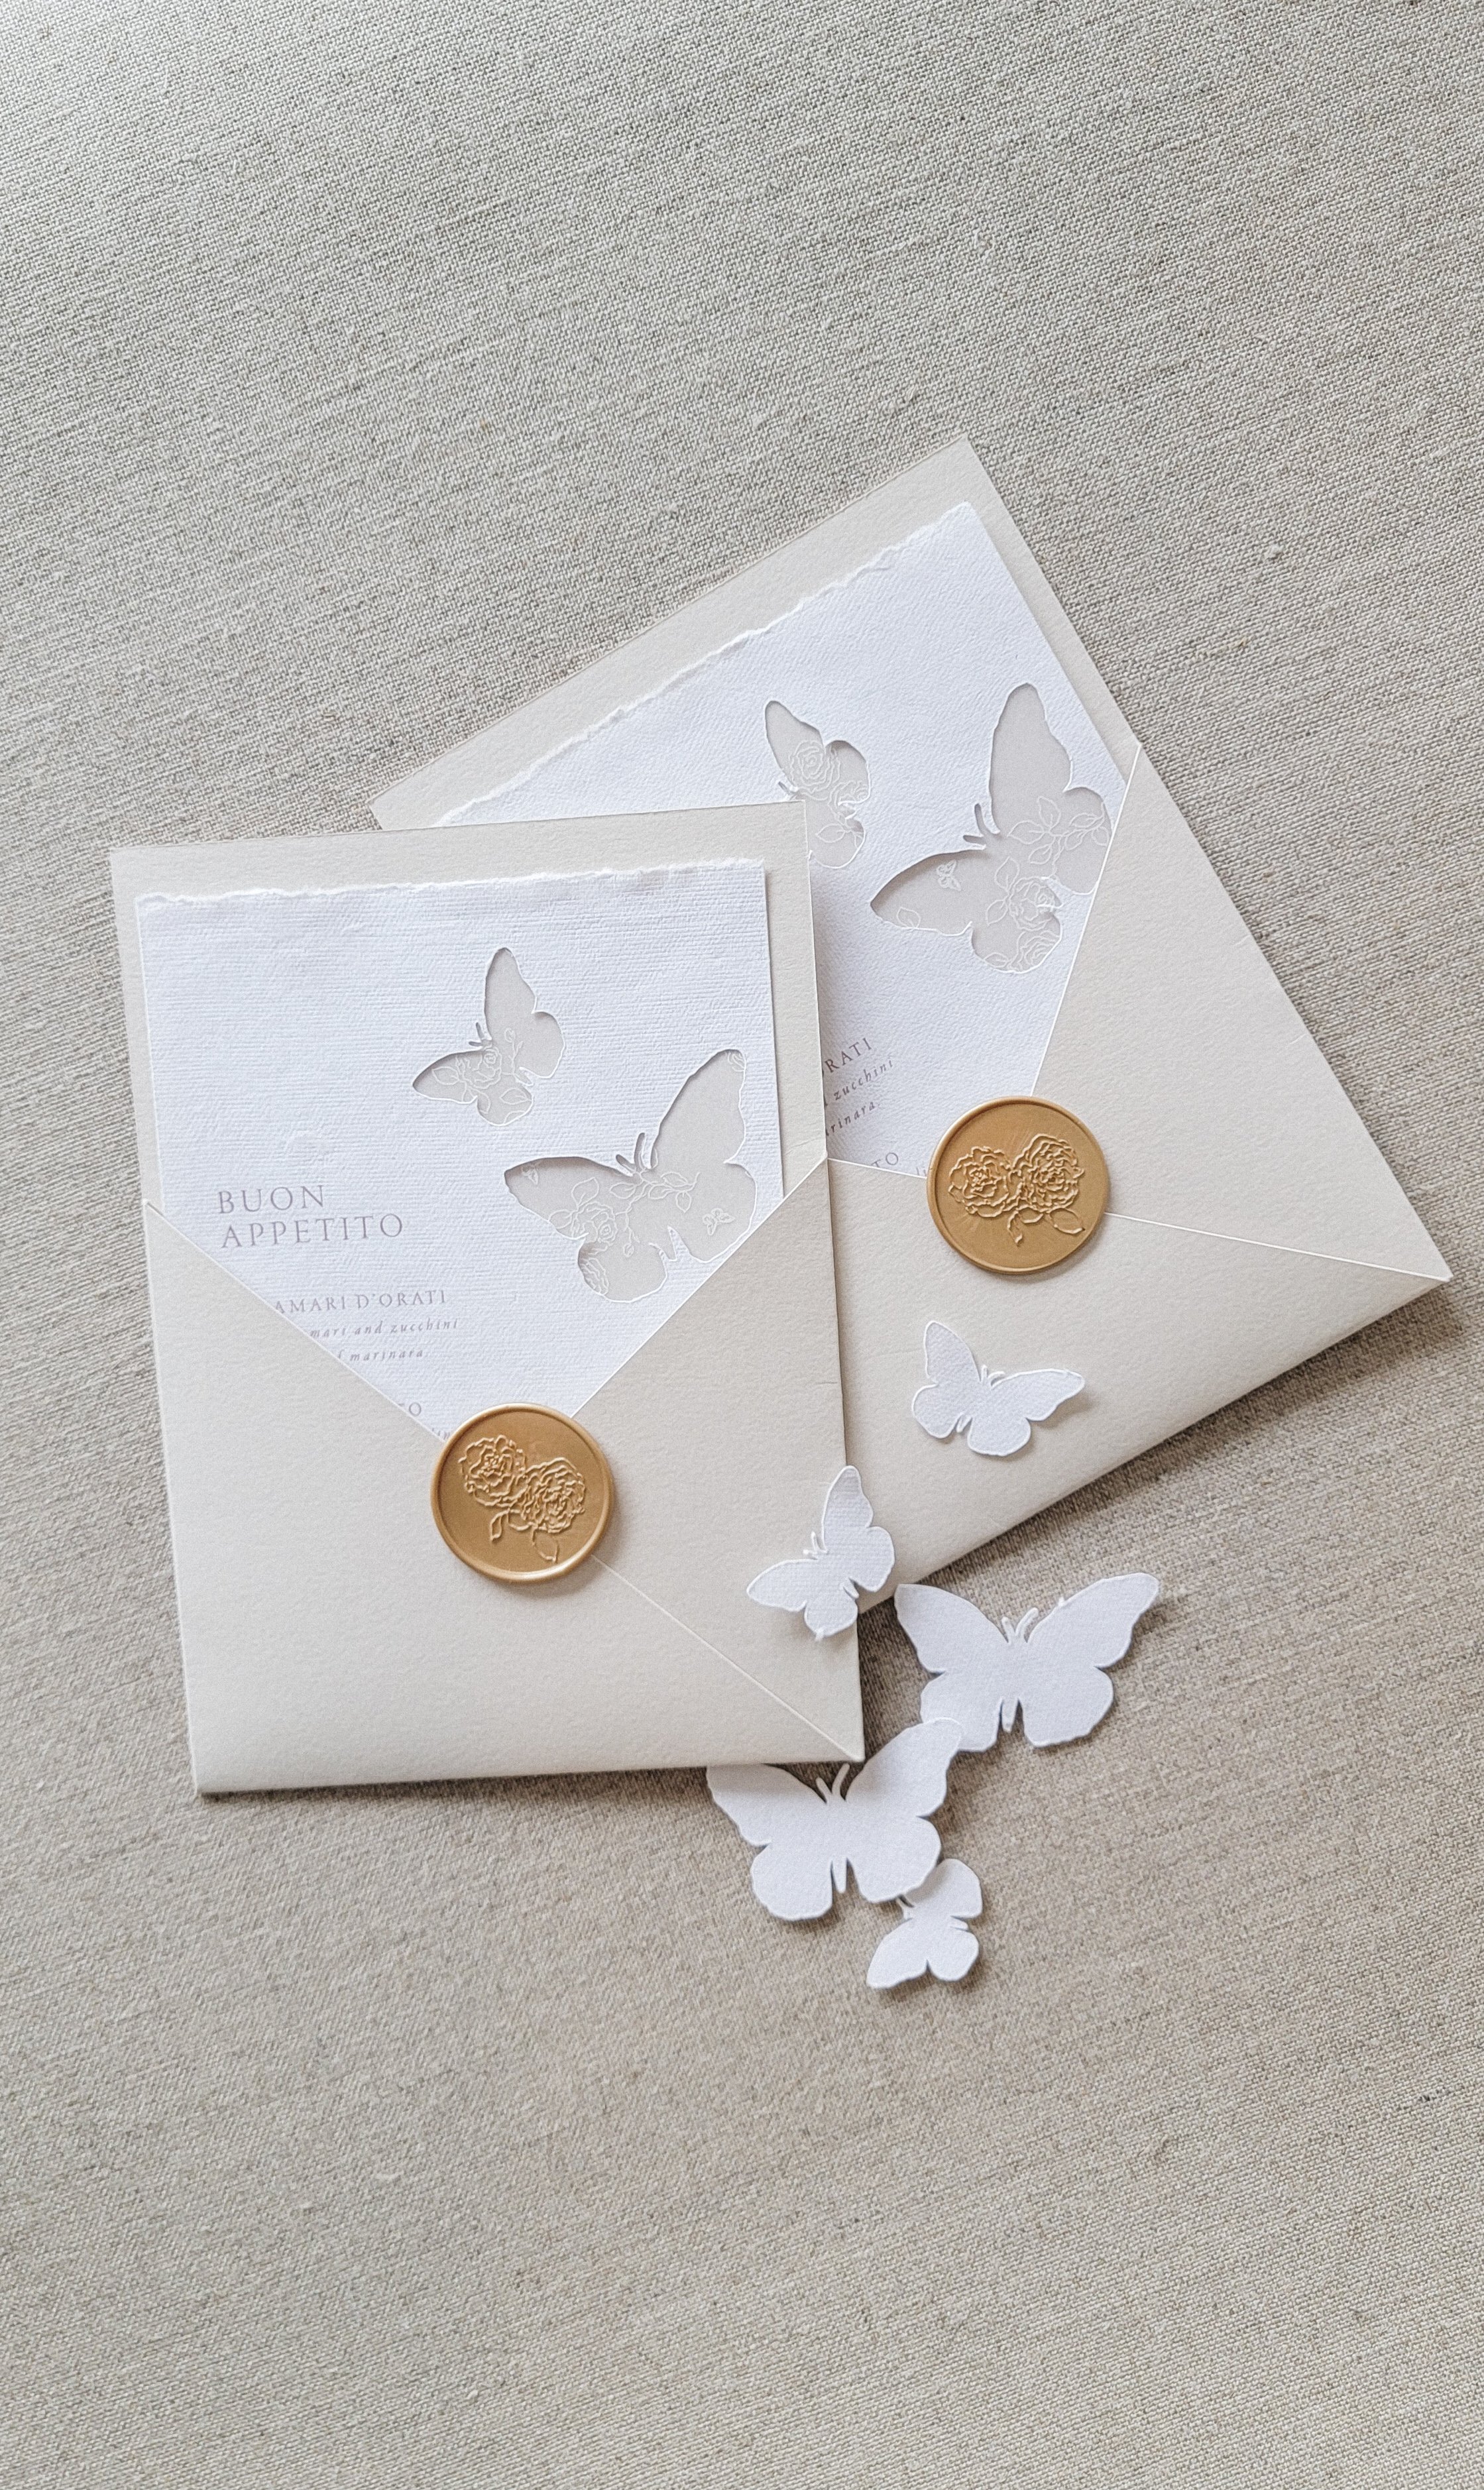 Butterfly Wedding Menus in Taupe Pockets with Gold Wax Seals | Custom Wedding Invitations | Krisanna Elizabeth Co.jpg